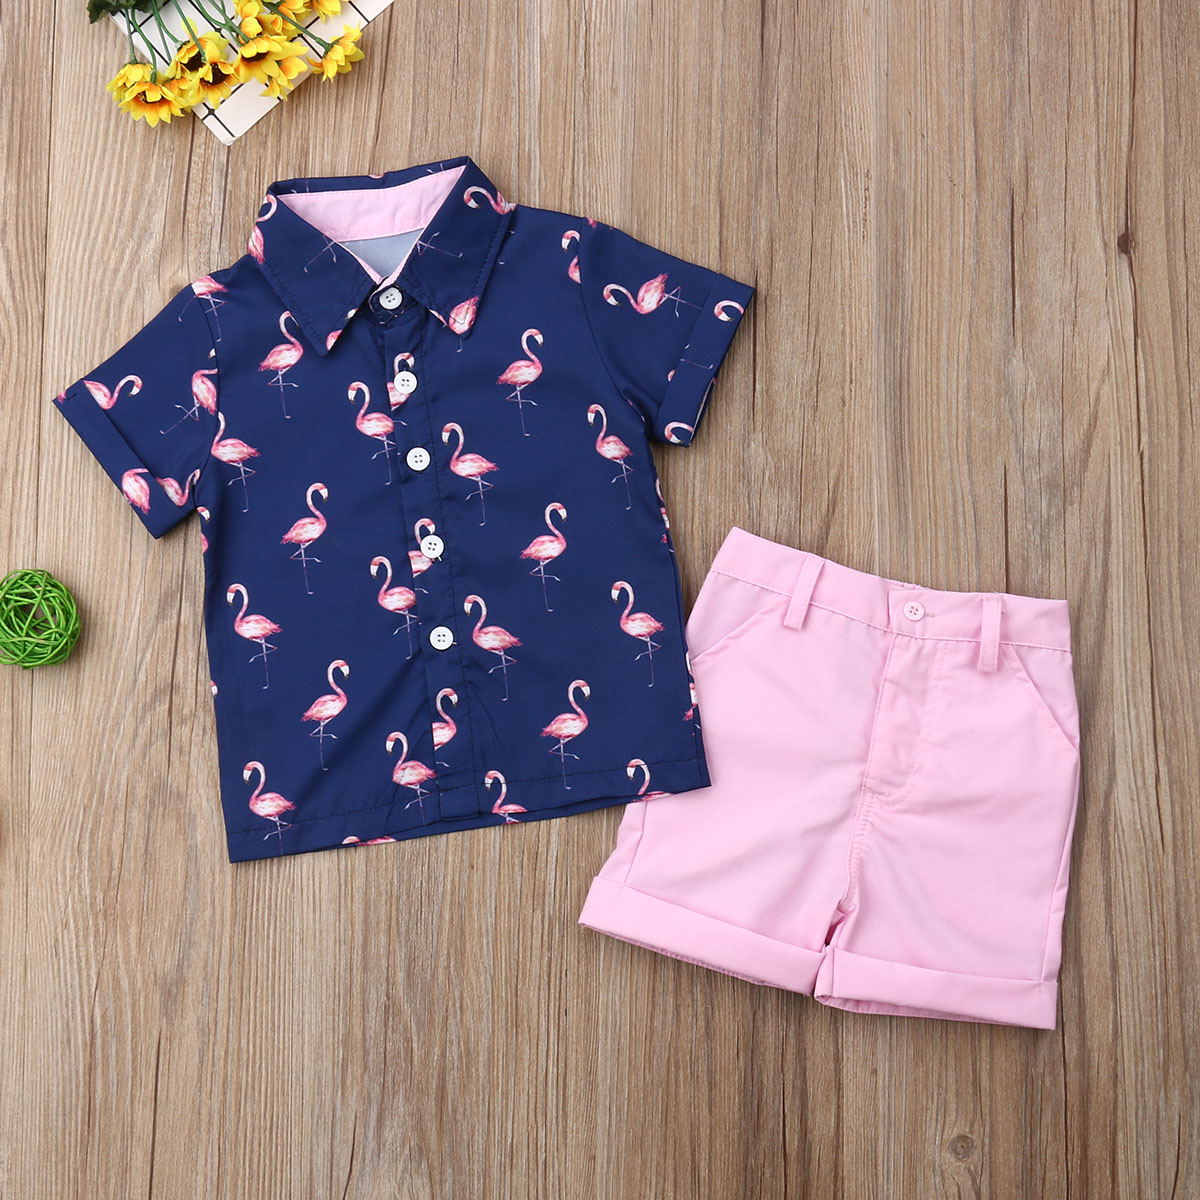 Girl's Flamingo Printed Summer Clothing Set